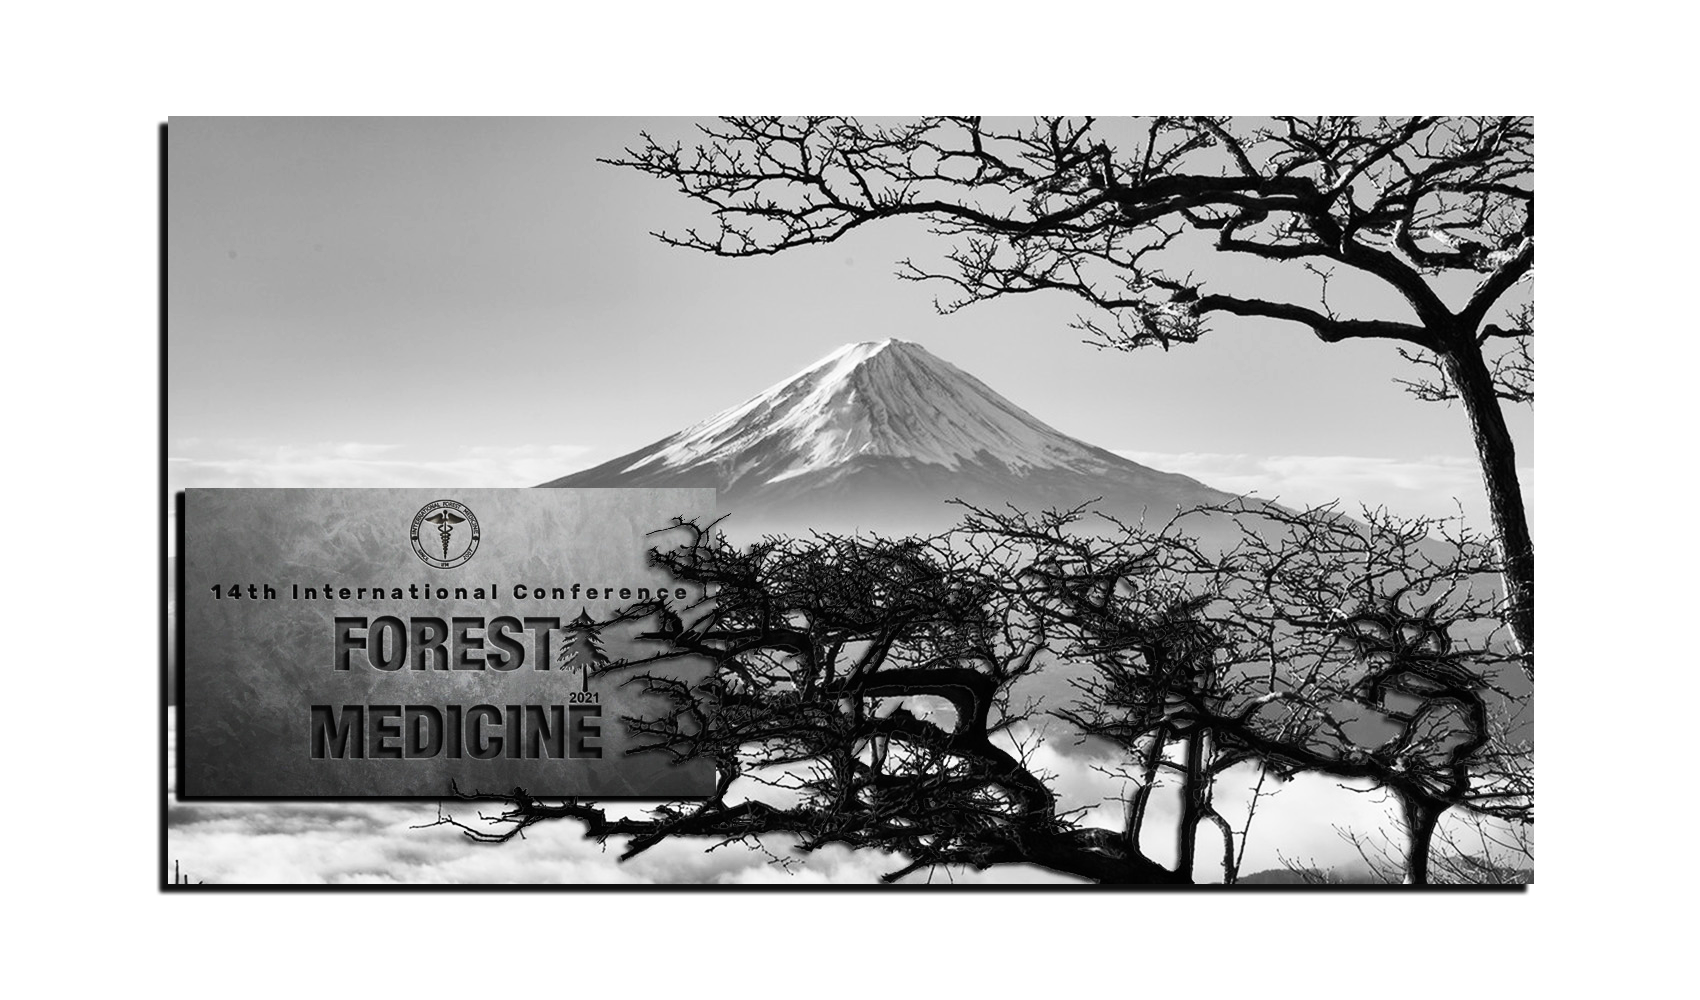 international-forest-medicine,japan,shinrin-yoku,baños-de-bosque,forest-medicine,forestbathing,foresttherapy,pioneroshinrin-yoku,historia-shinrin-yoku,naturetherapy,shinrinyoga,fuji,aseusy,samuraispain